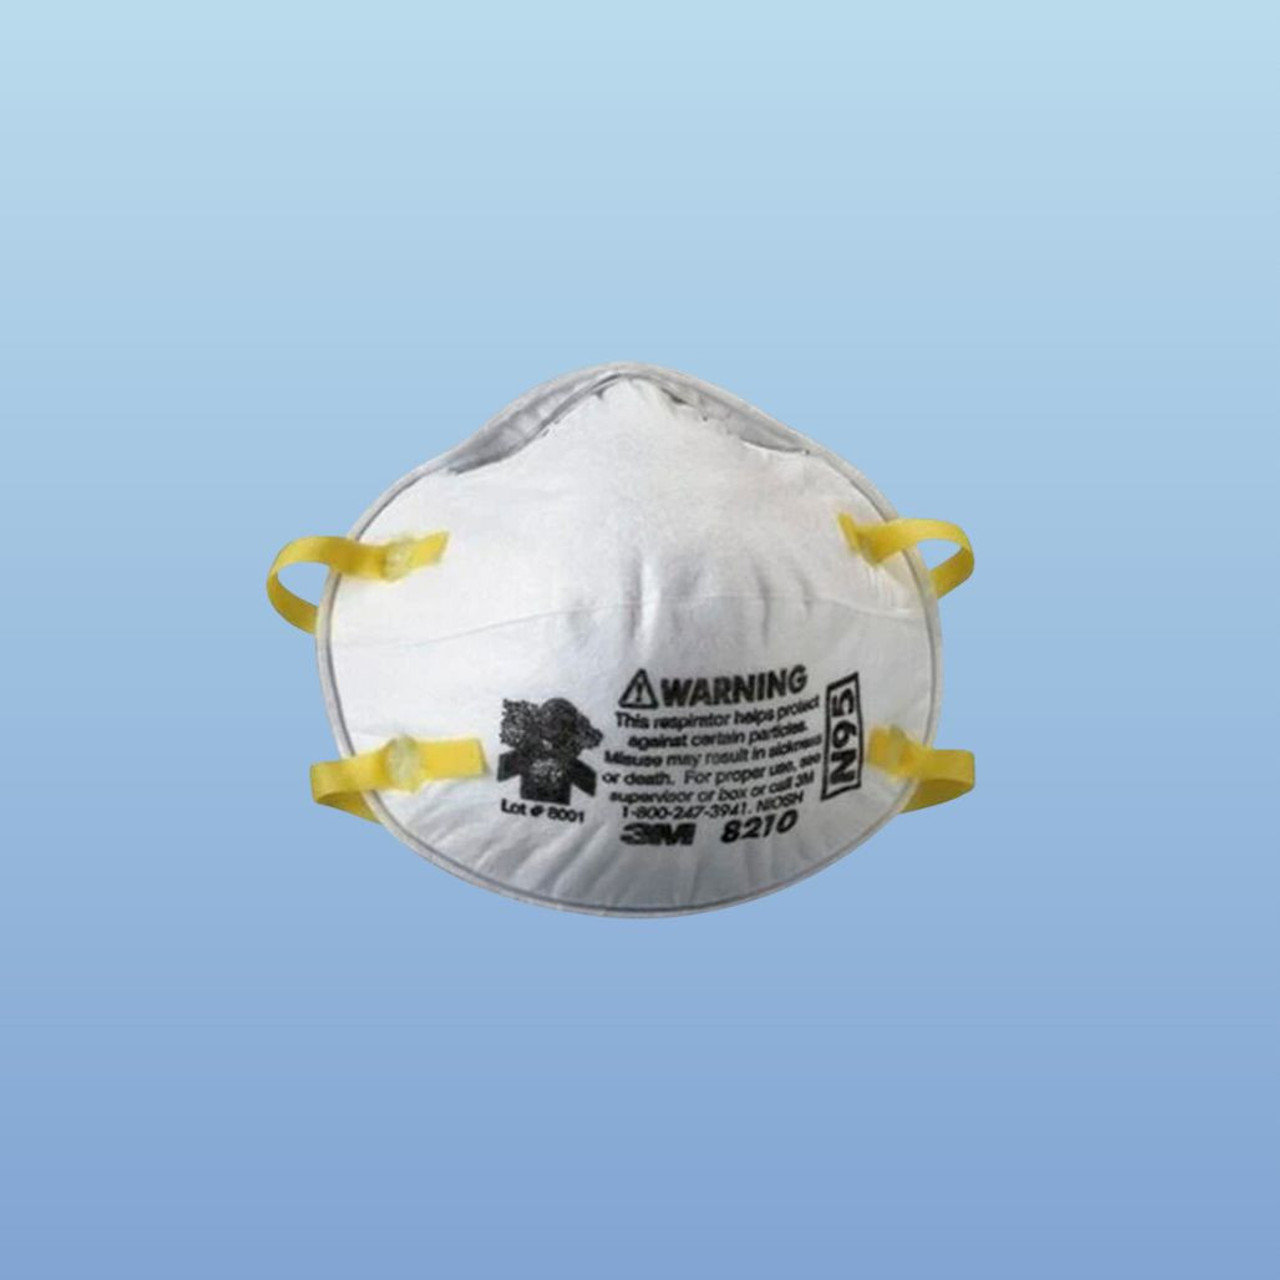 Misbruge Behandle Barmhjertige 3M 8210 N95 Disposable Respirator - Harmony Lab & Safety Supplies